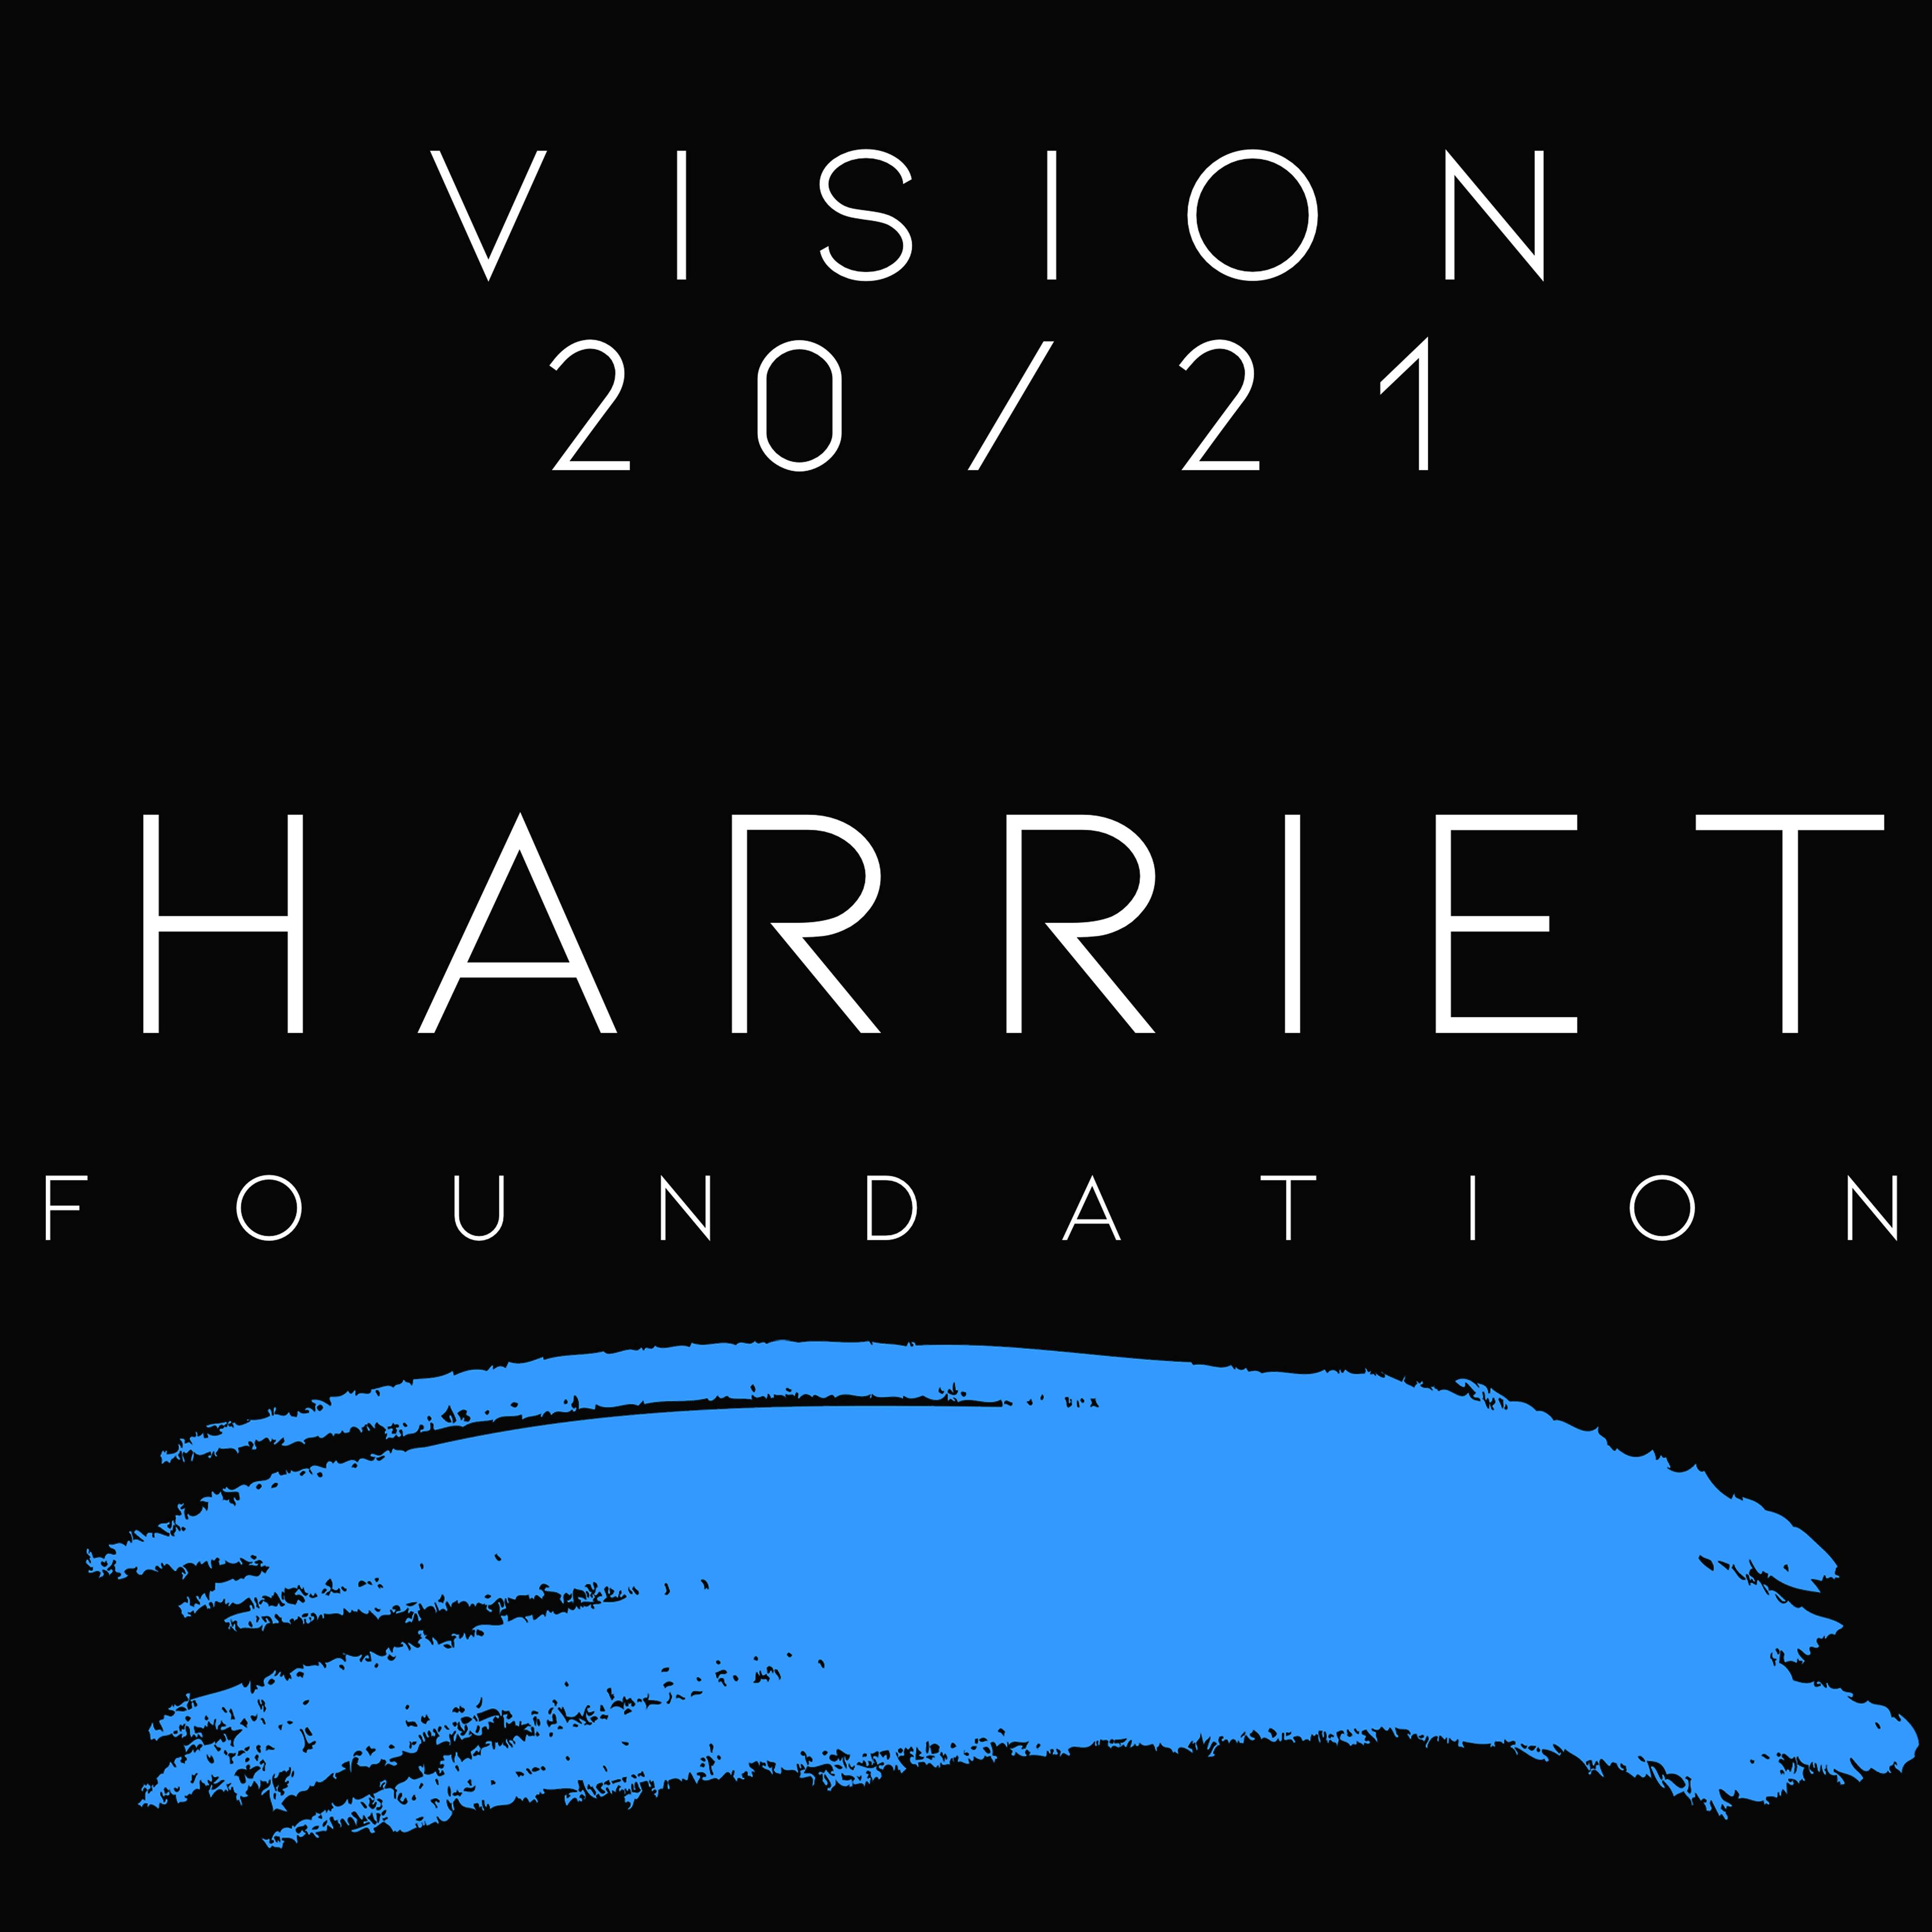 The Harriet Foundation